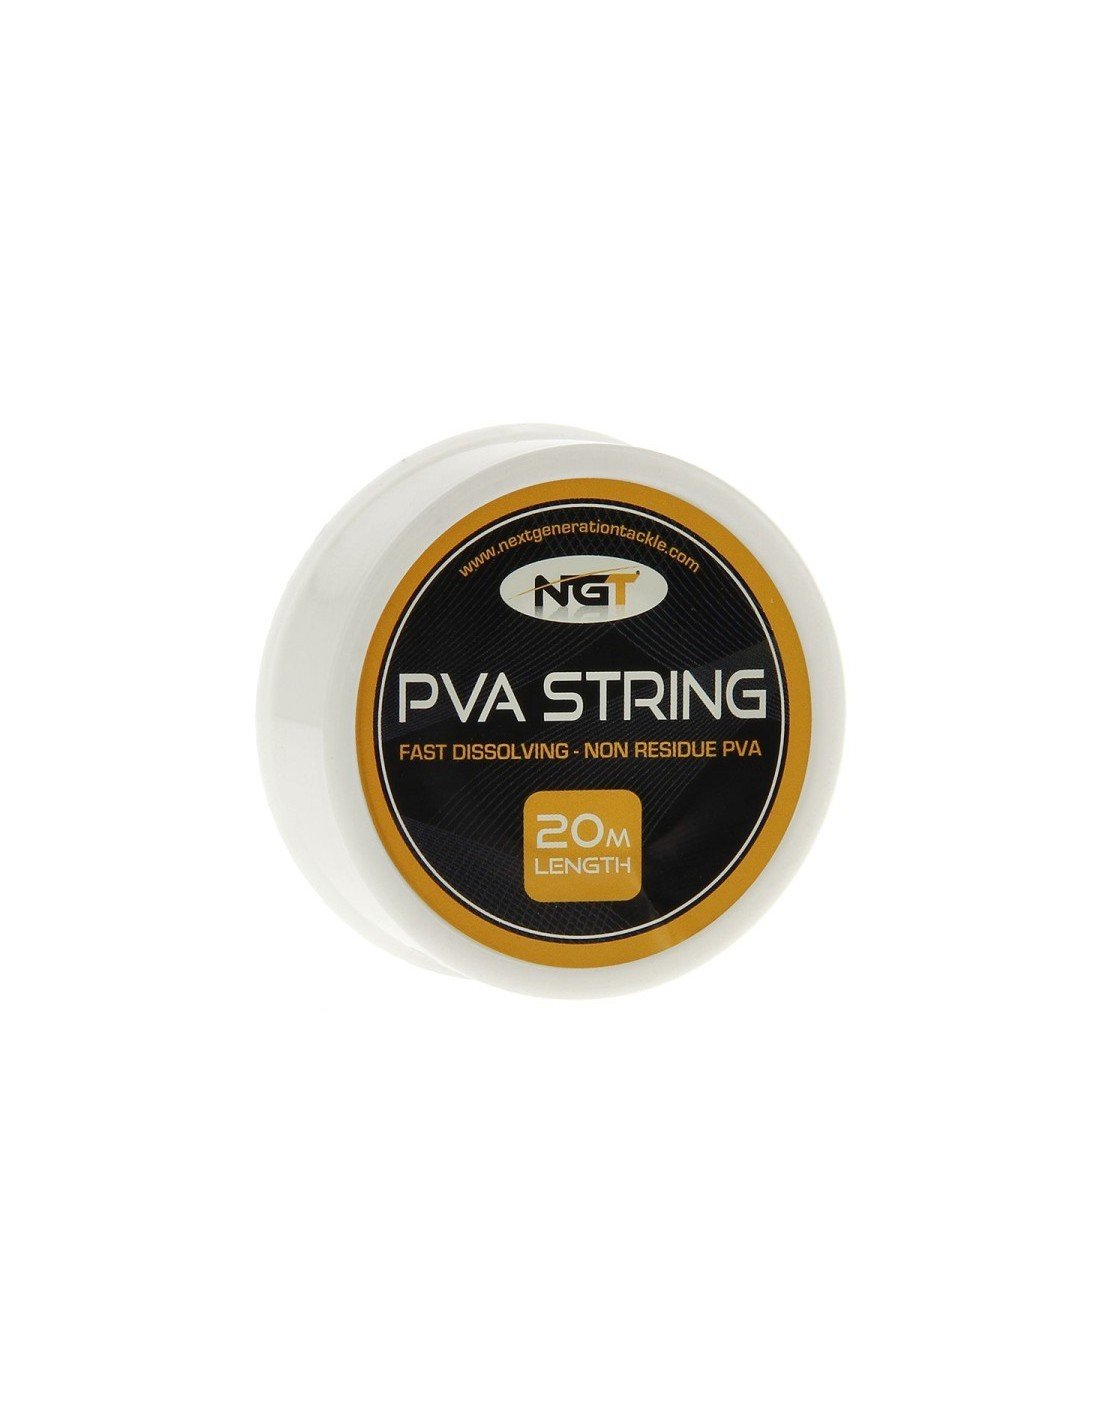 NGT PVA String - 20m Dispenser ПВА конец